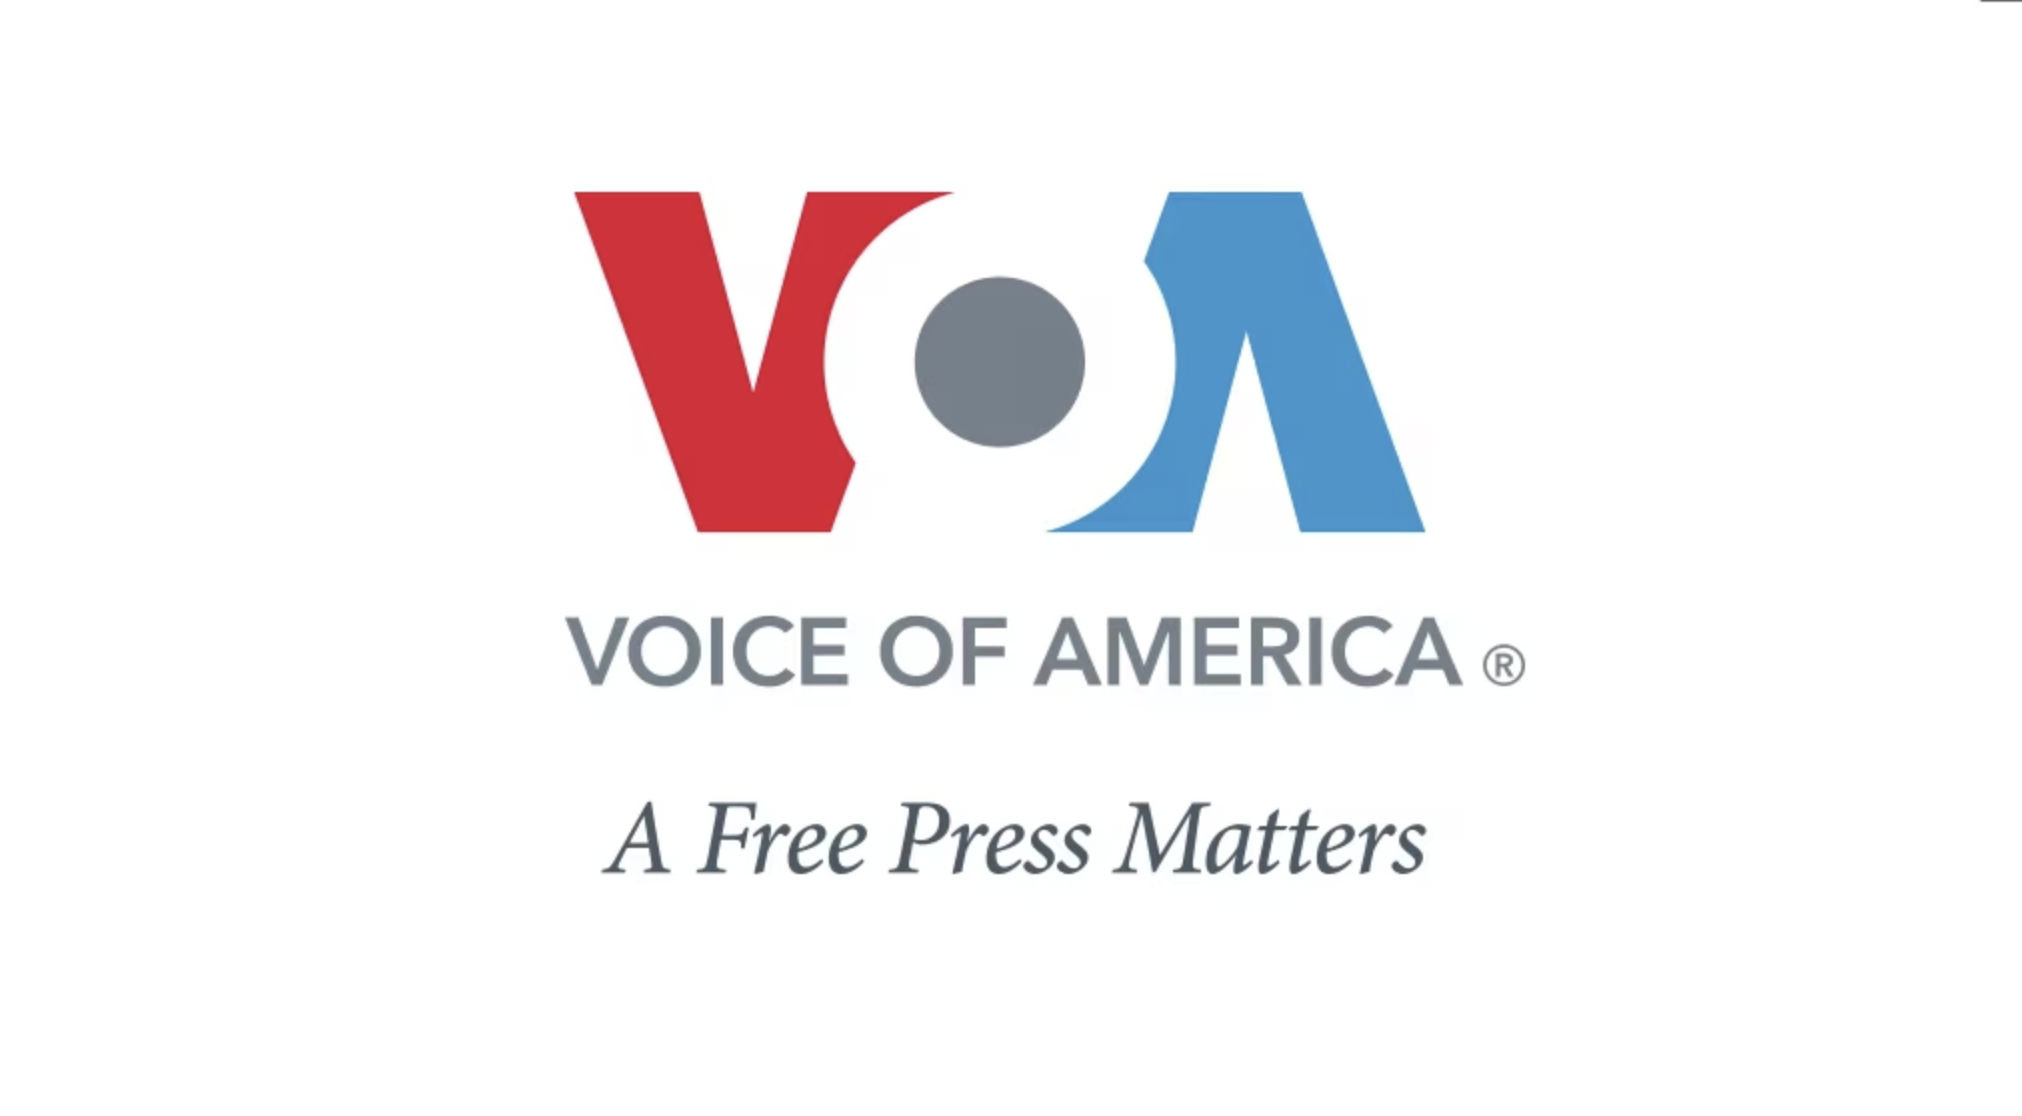 VOA statement denouncing Venezuelan President’s verbal attacks against VOA Spanish journalist